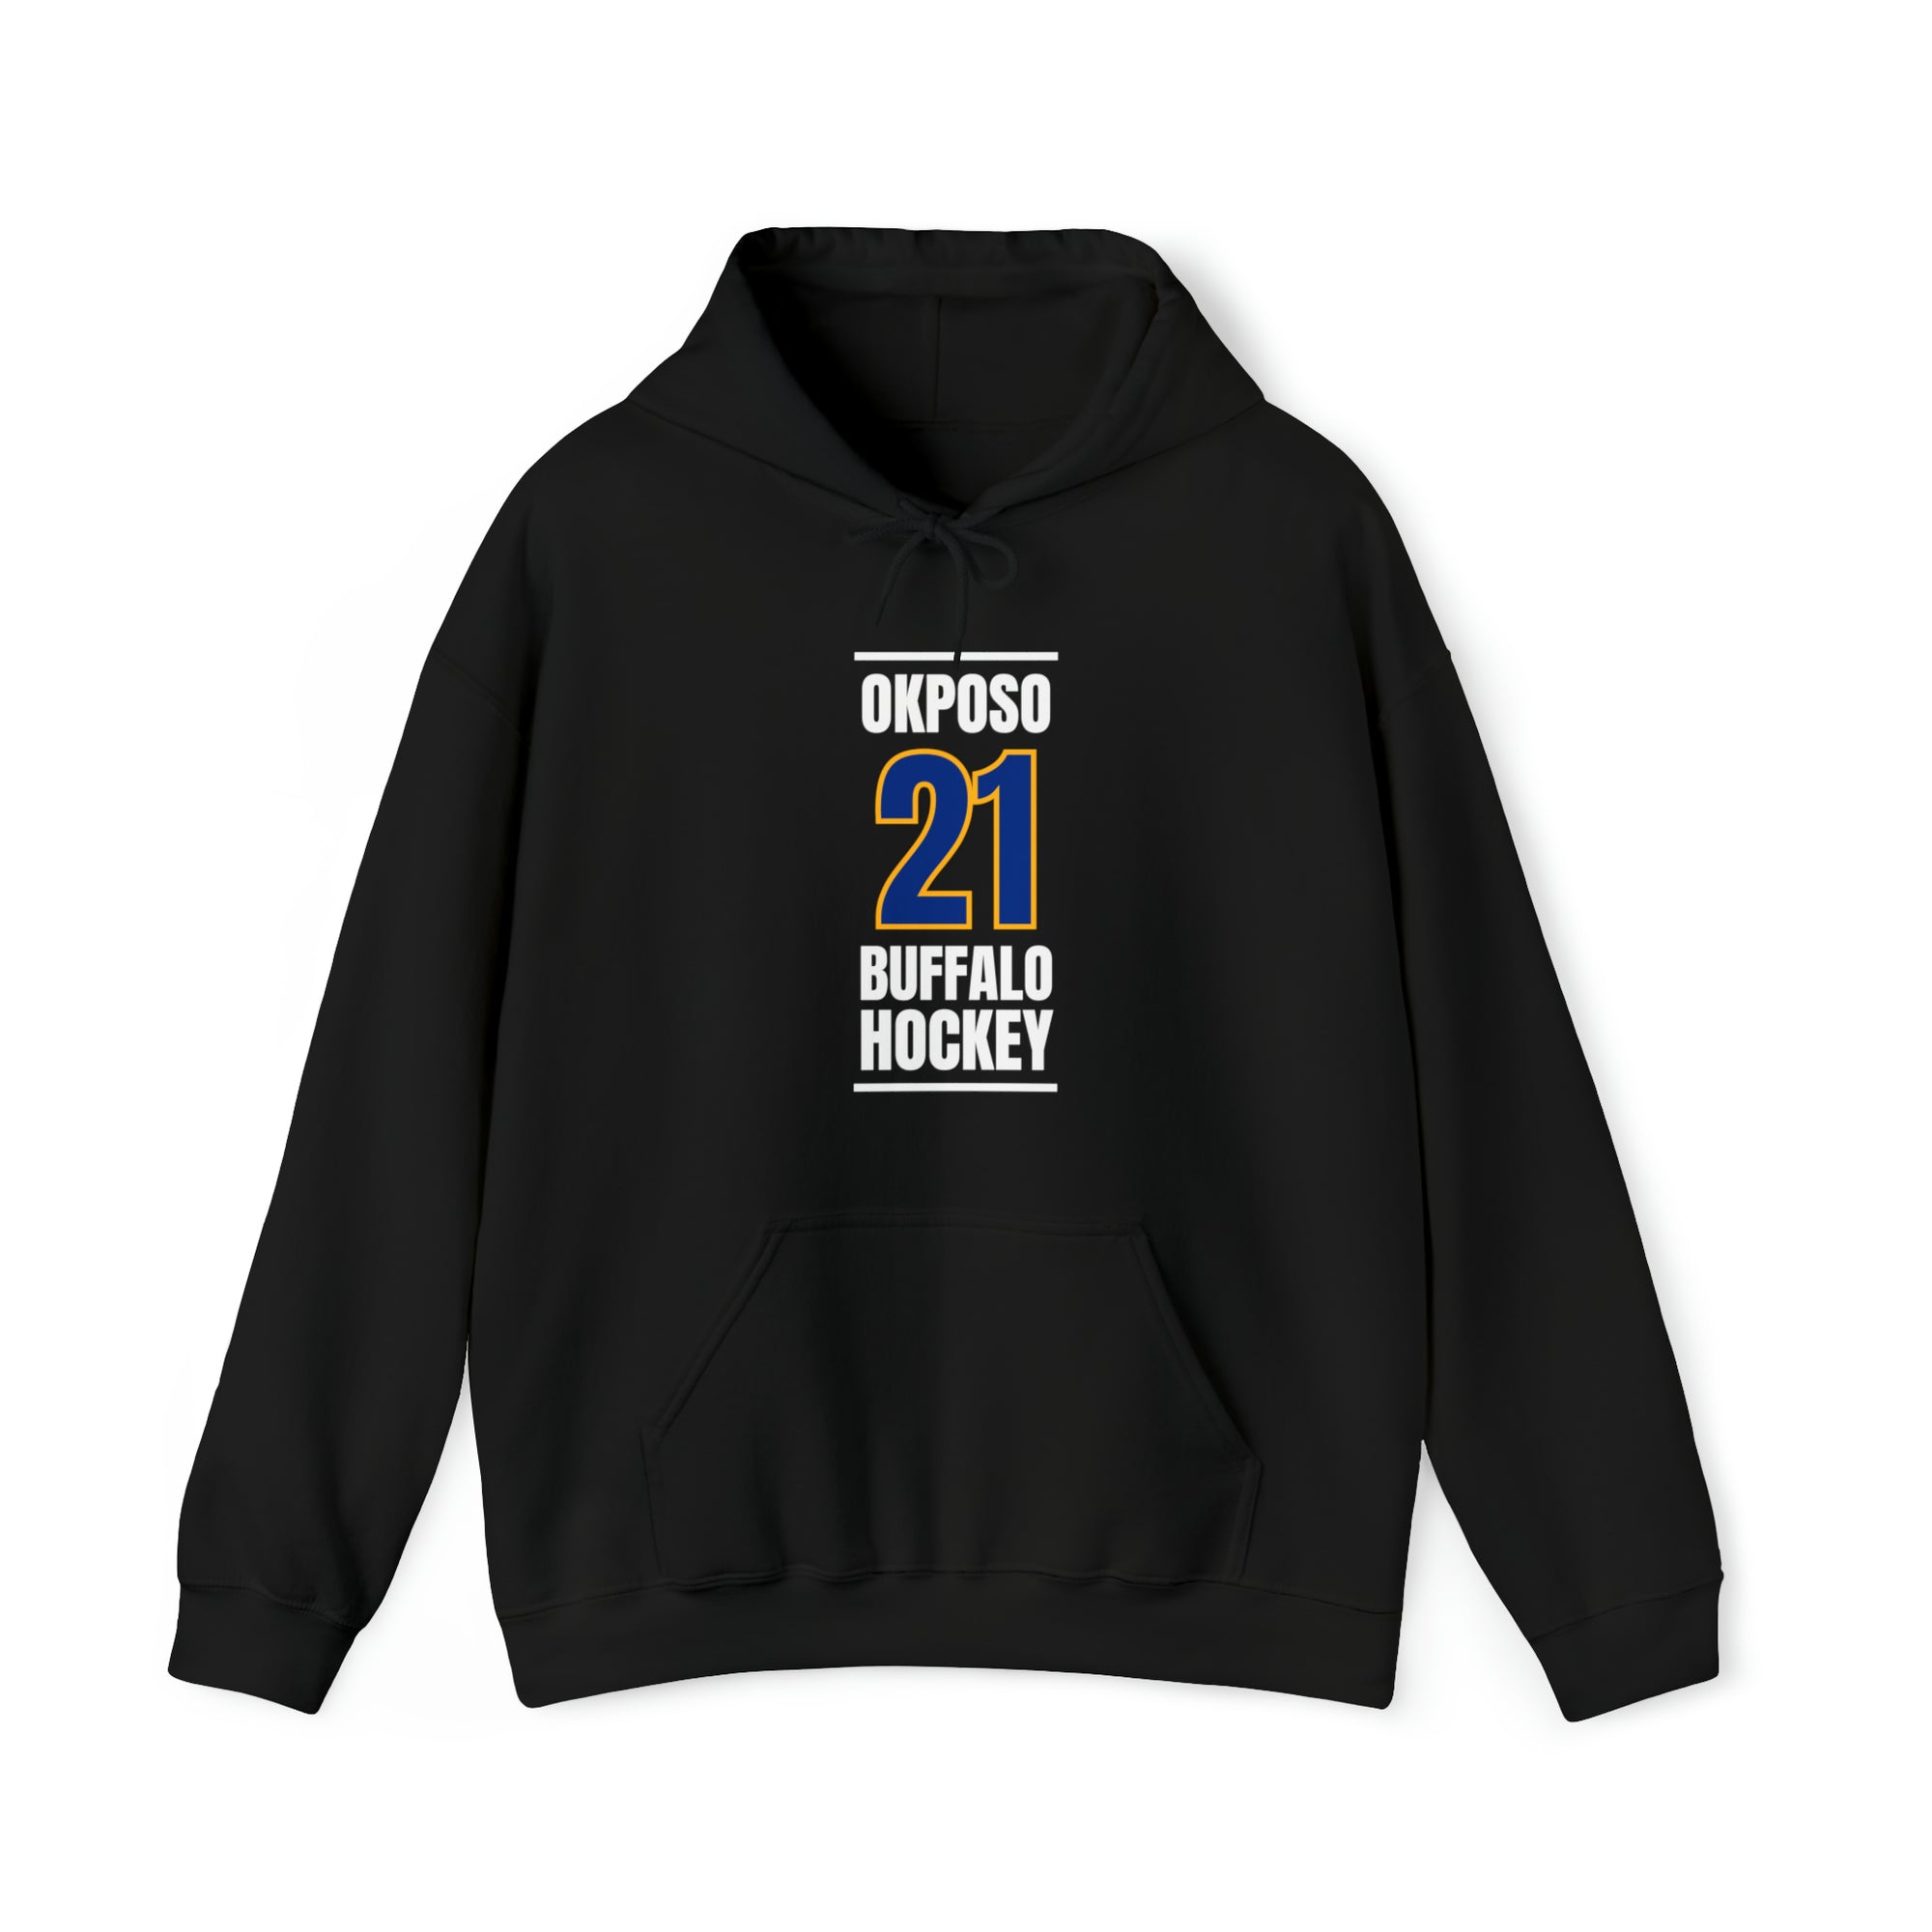 Okposo 21 Buffalo Hockey Royal Blue Vertical Design Unisex Hooded Sweatshirt